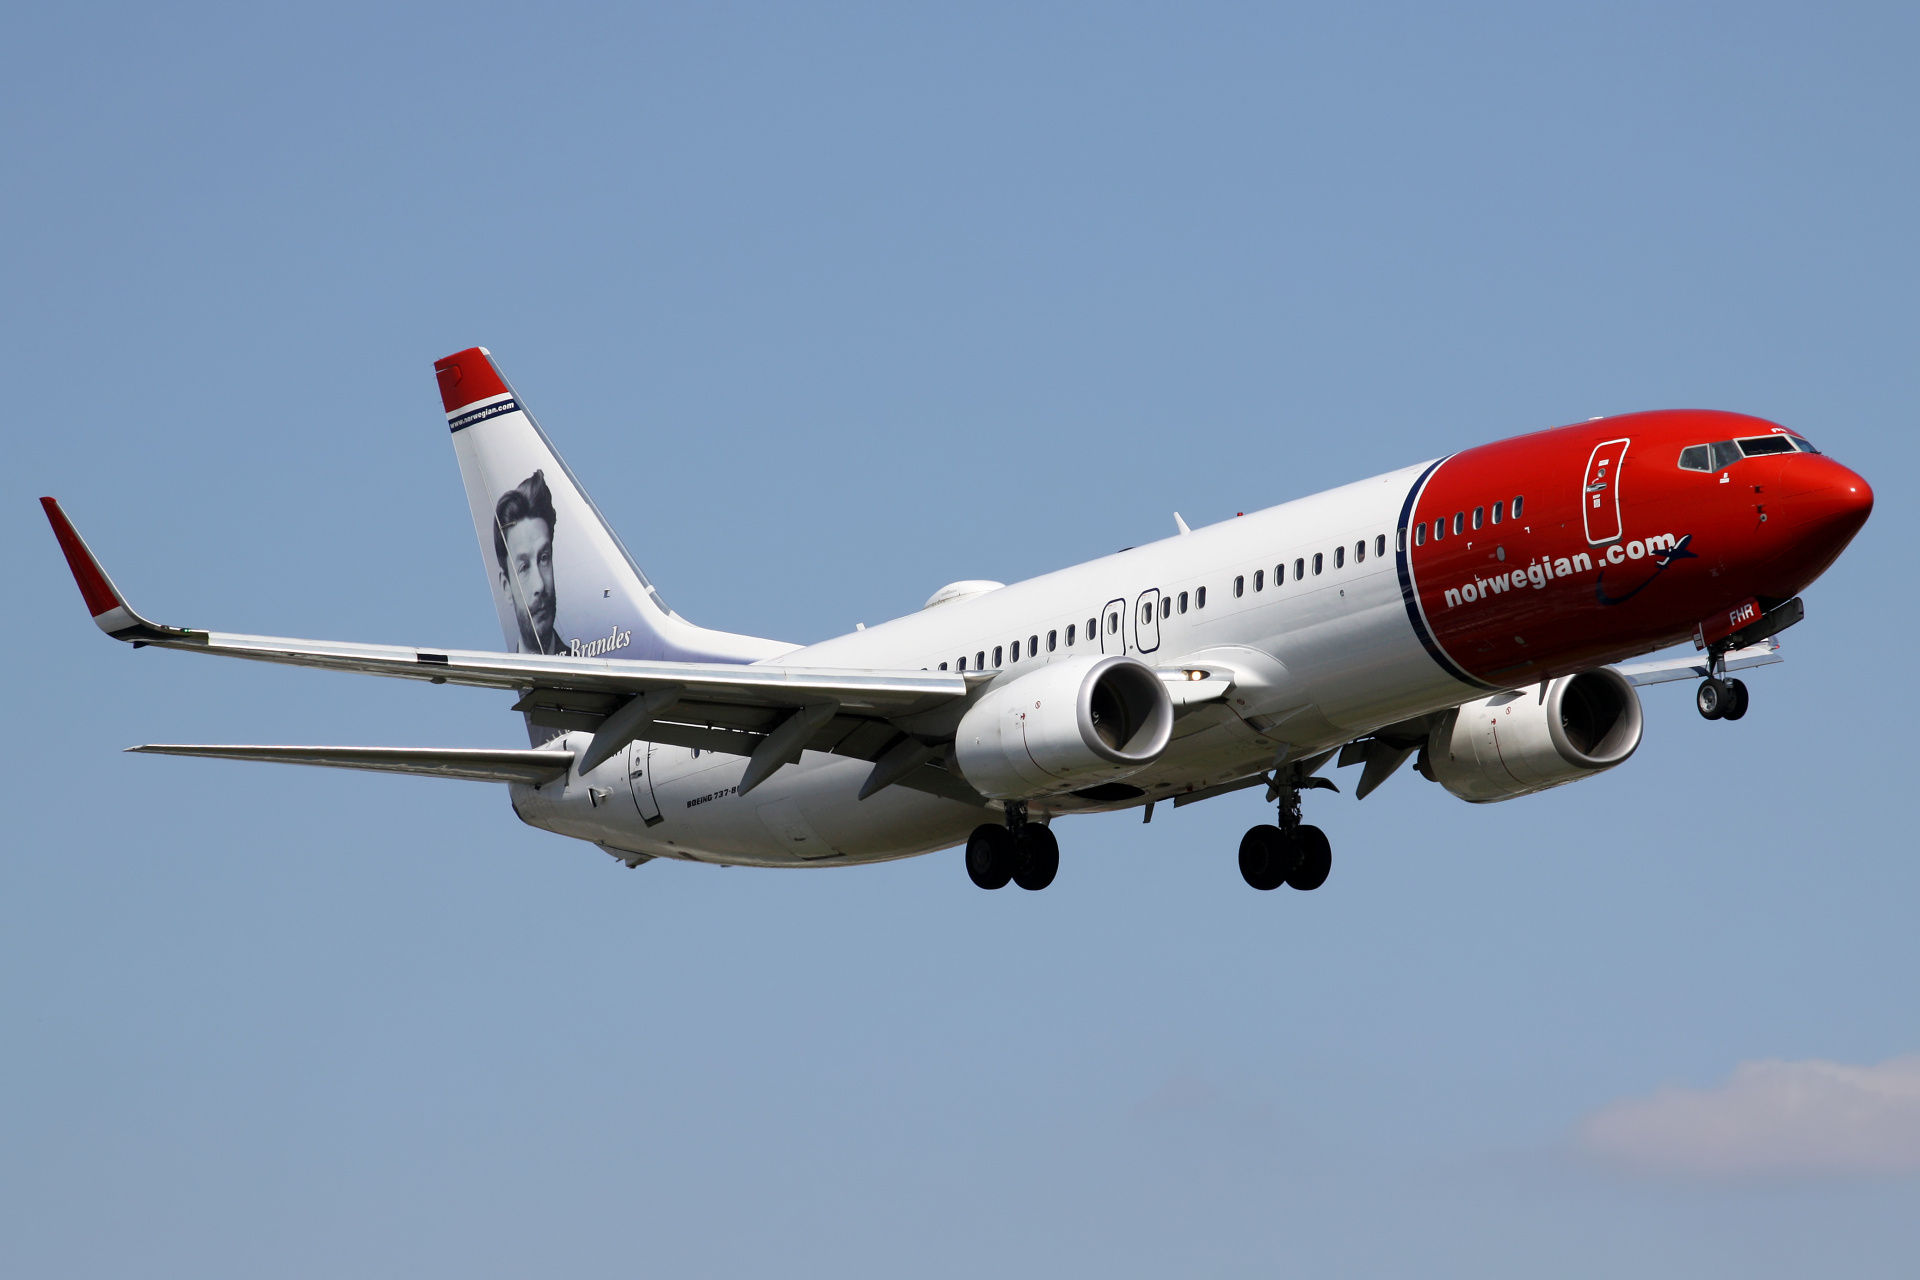 EI-FHR, Norwegian Air International (Aircraft » EPWA Spotting » Boeing 737-800 » Norwegian Air)